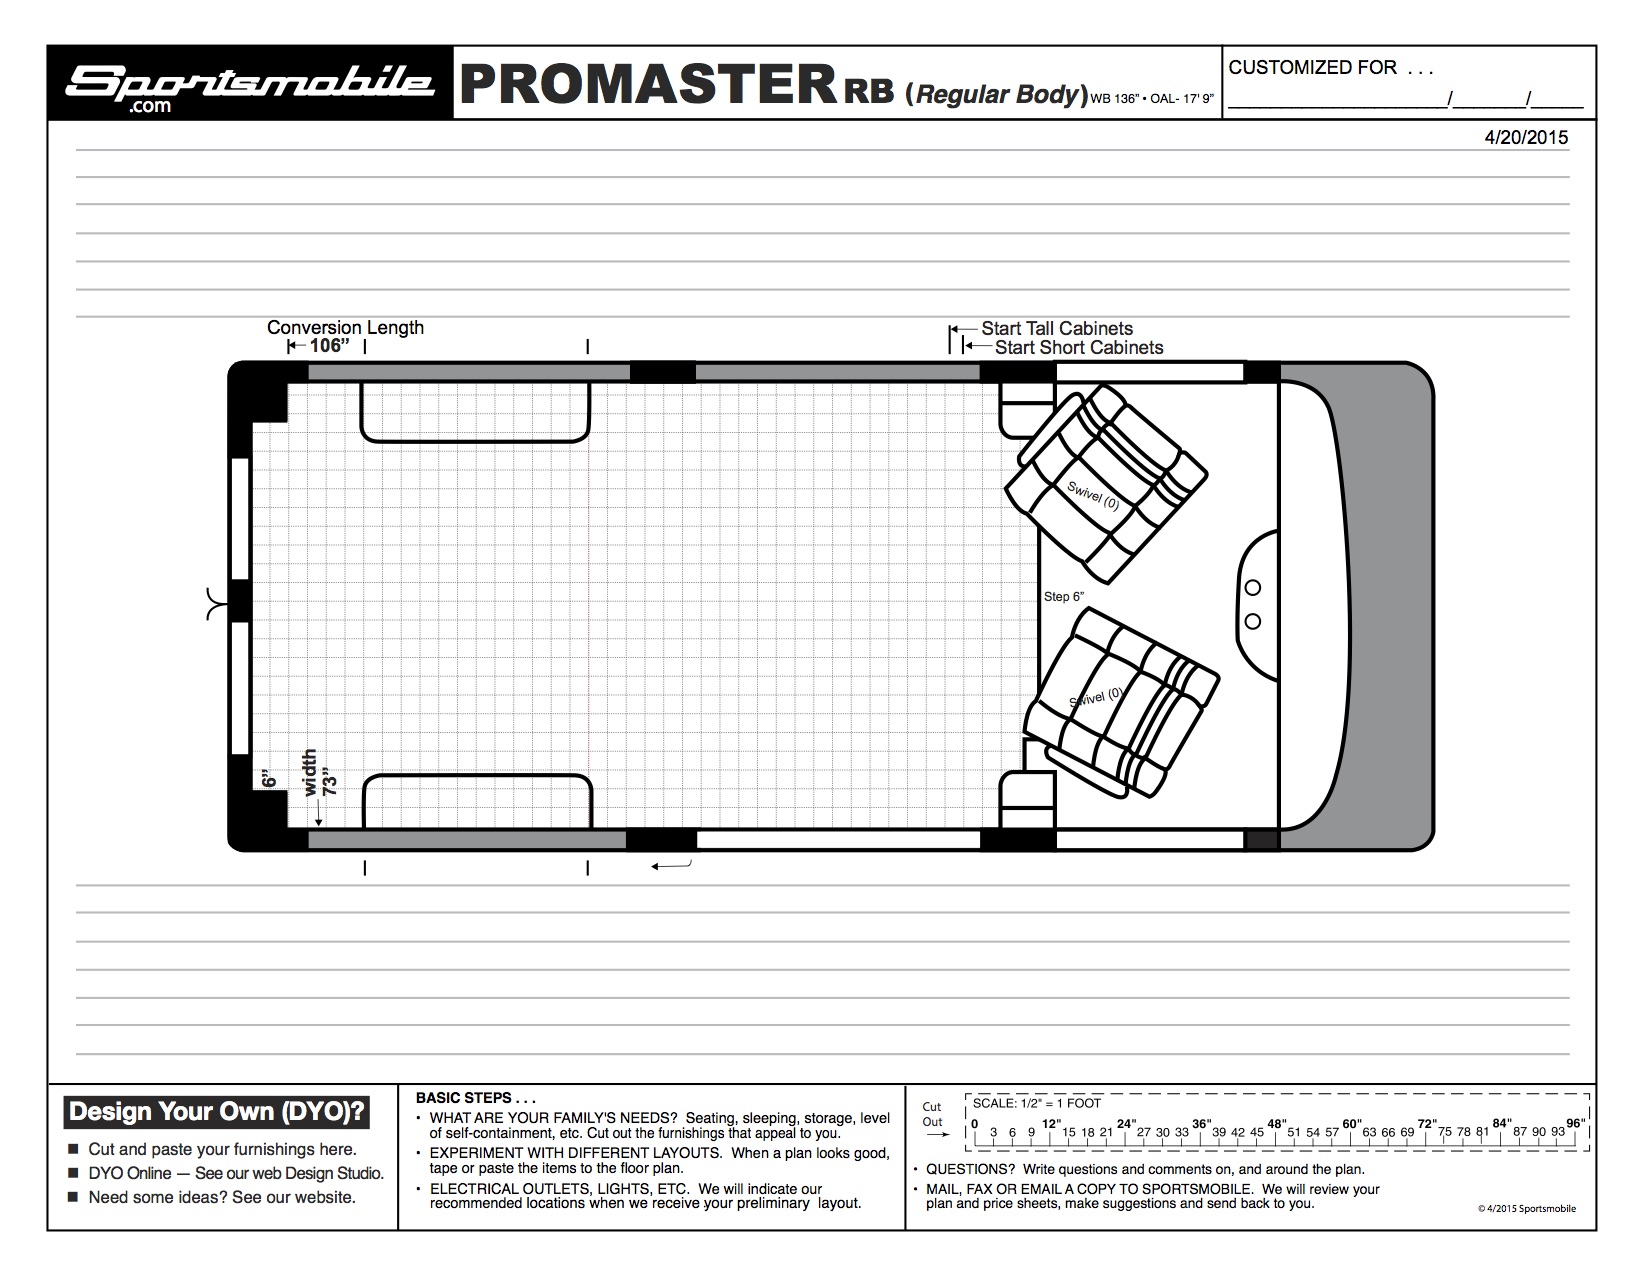 Ram Promaster Floor Plan Template